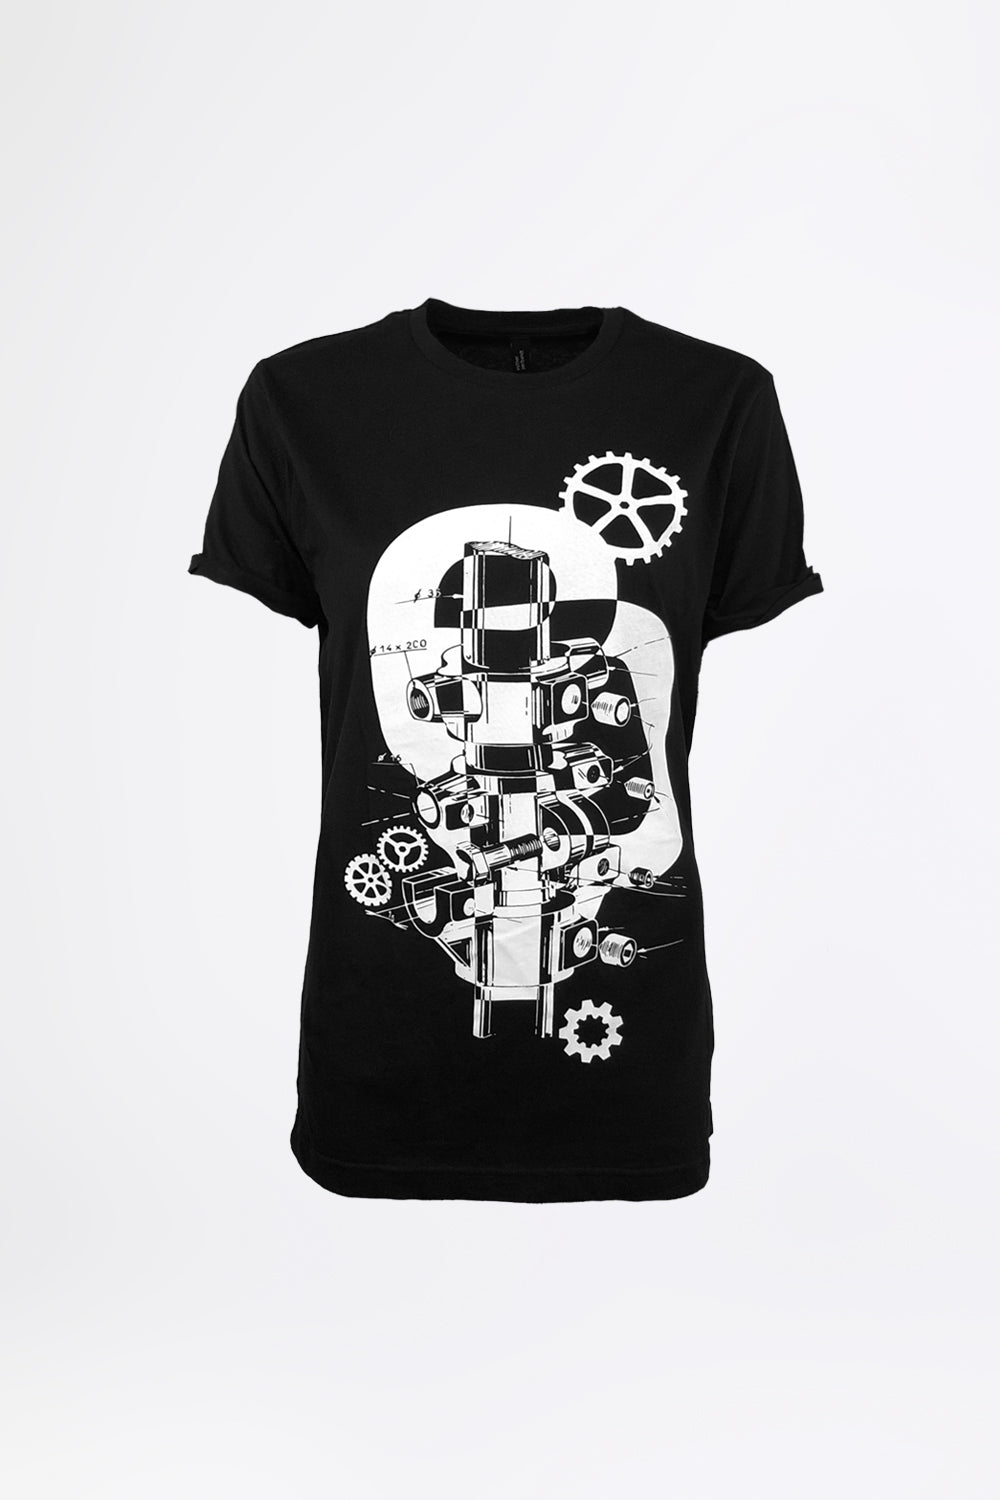 DREAM MACHINE - Black Statement T-Shirt - Men